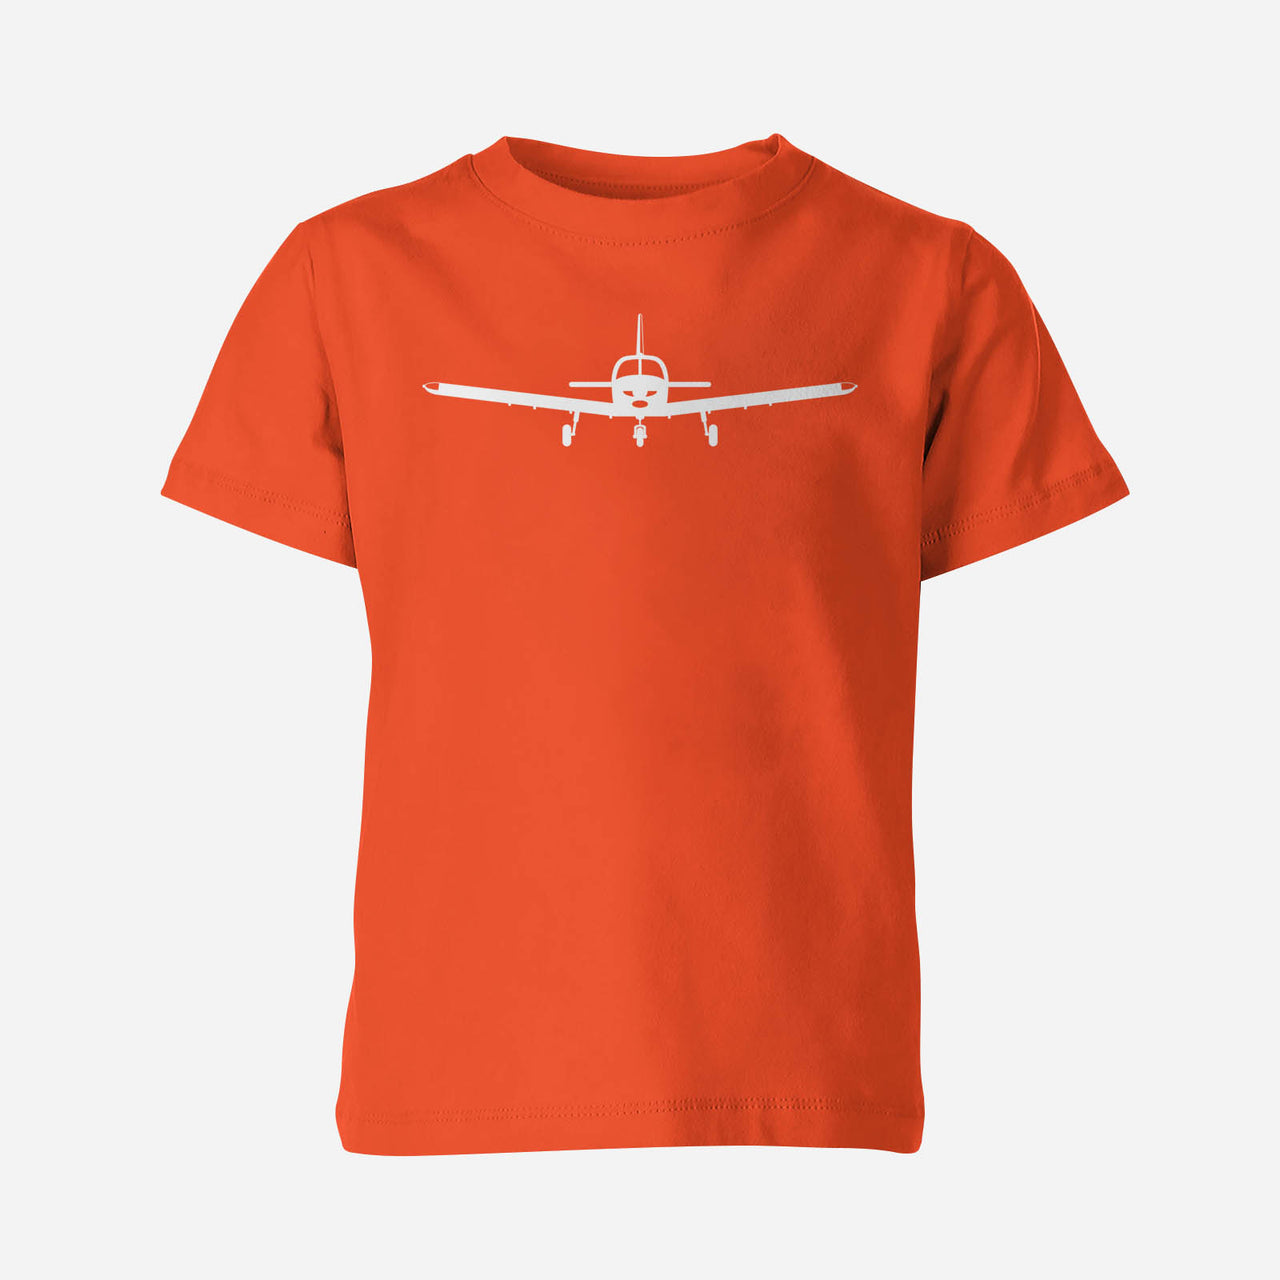 Piper PA28 Silhouette Designed Children T-Shirts